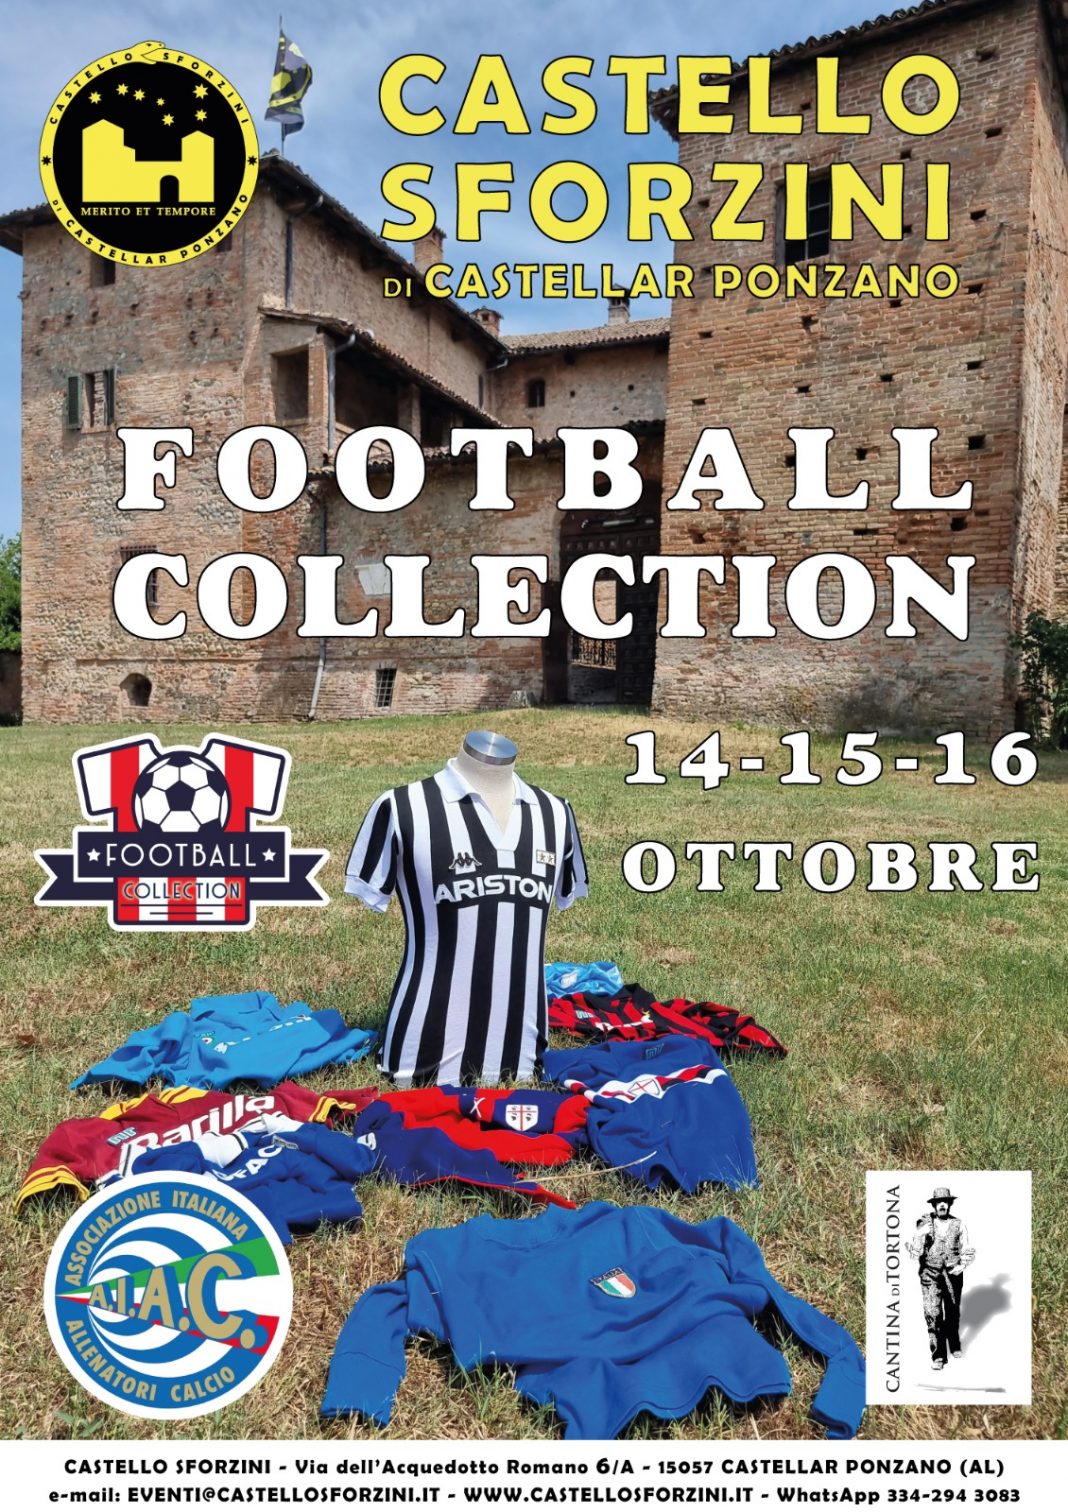 Football collectionhttps://www.exibart.com/repository/media/formidable/11/img/e68/Castello-Sforzini-Football-Collection-14-16-ottobre-2-1068x1512.jpeg